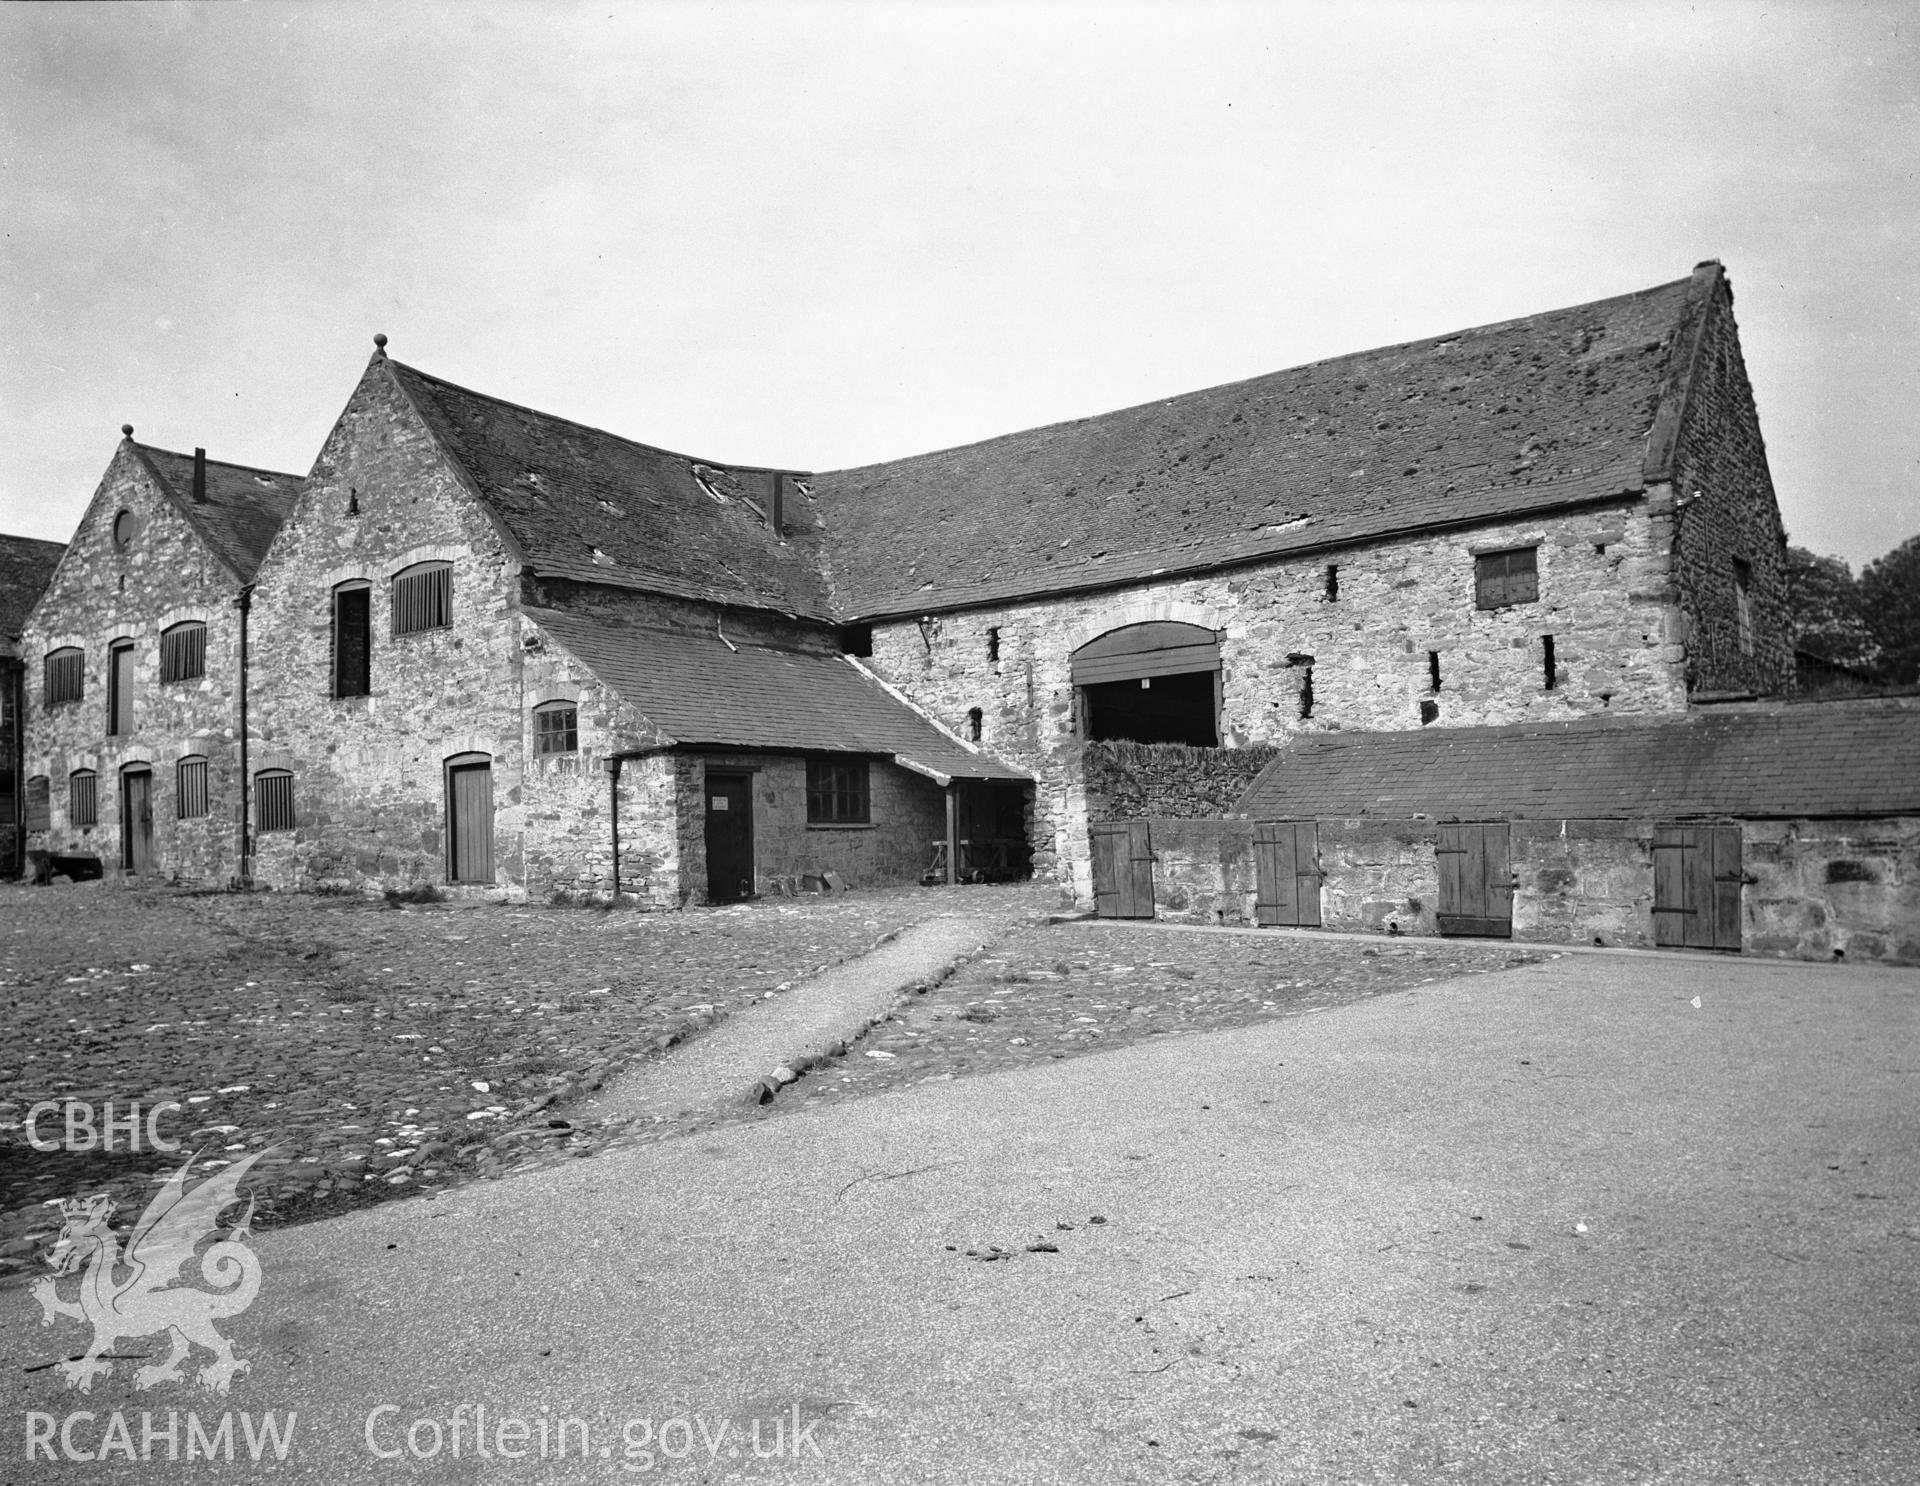 North range of farm buildings, taken in May 1942.